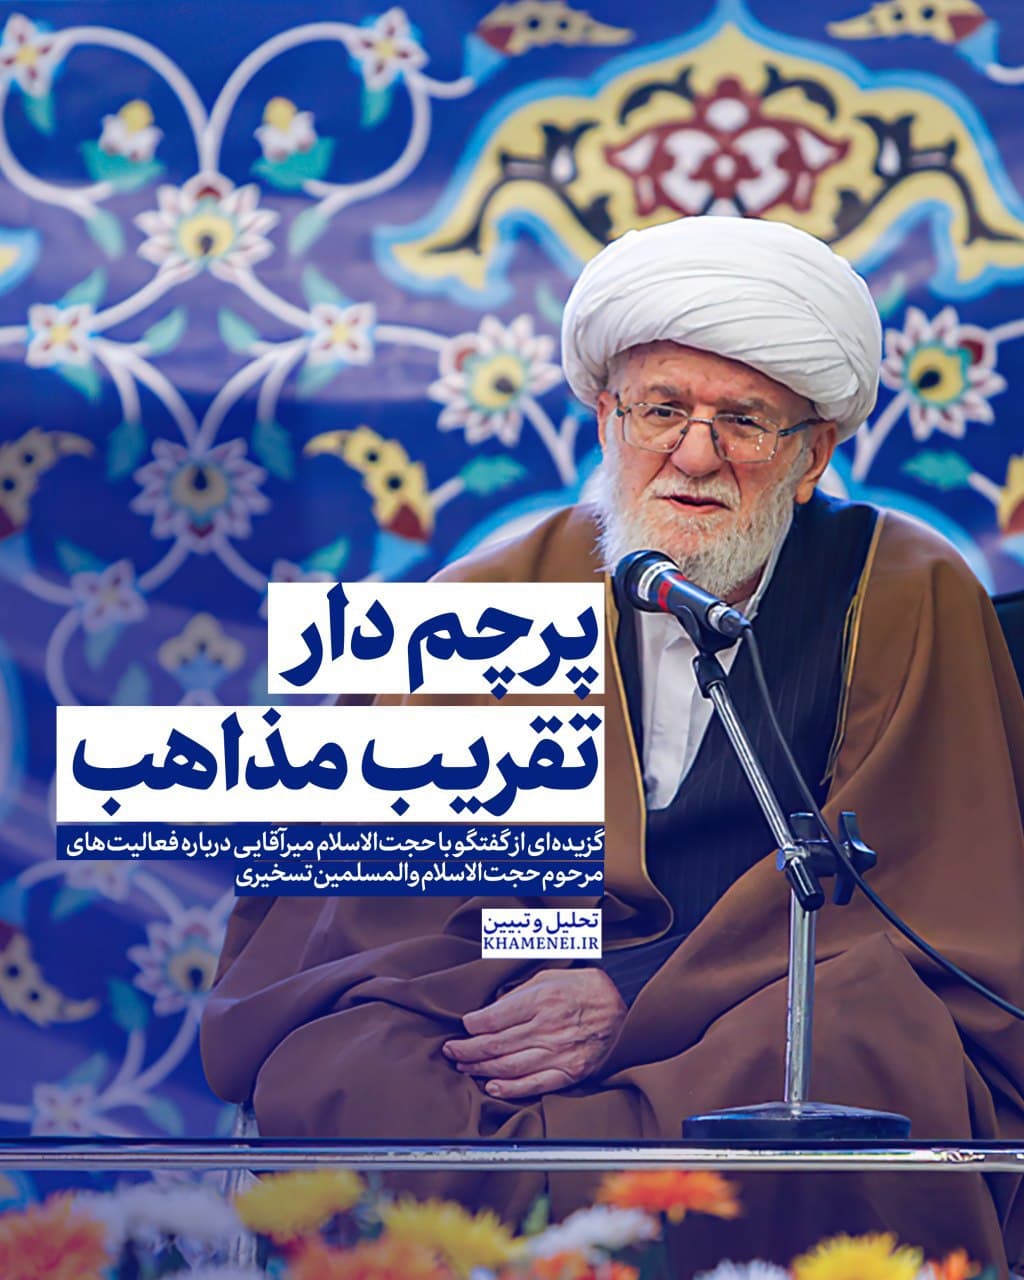 https://idc0-cdn0.khamenei.ir/ndata/news/46582/photo_2020-10-03_16-24-01.jpg